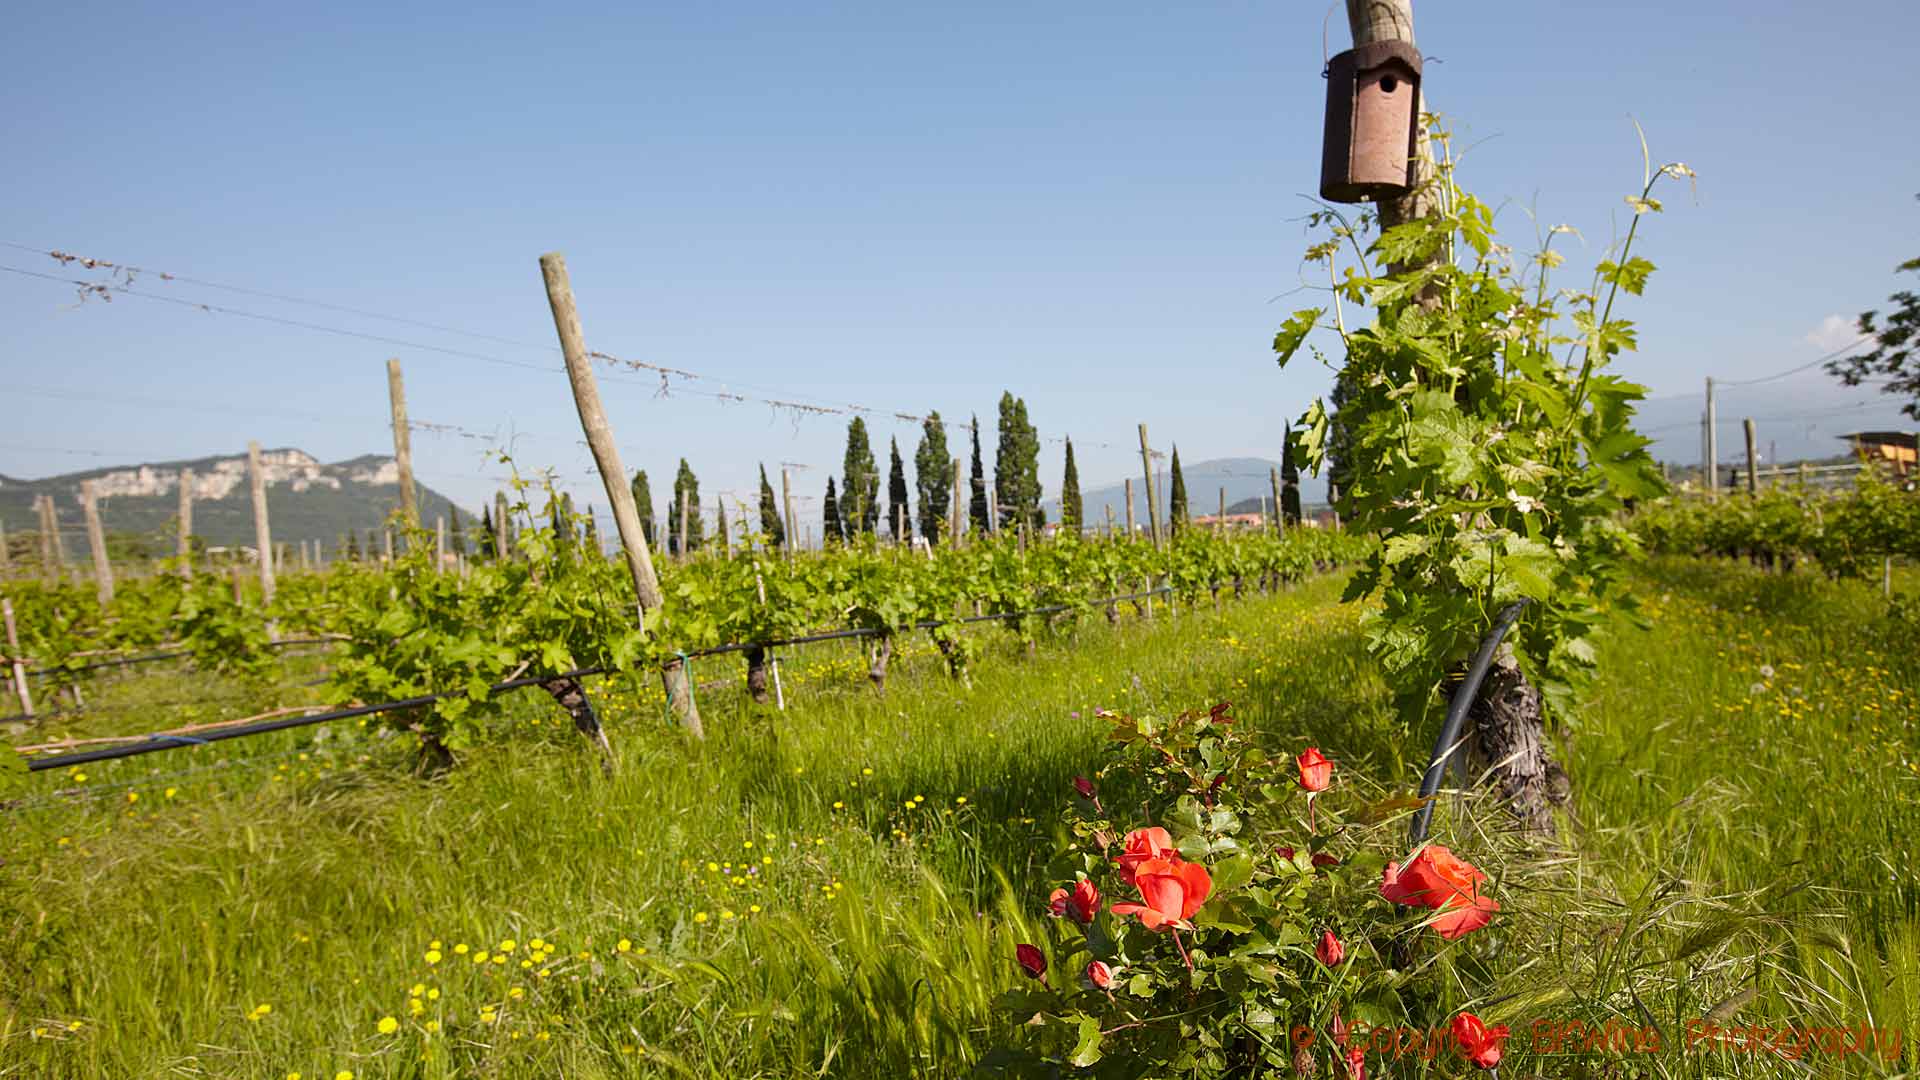 A lush green vineyard in Veneto